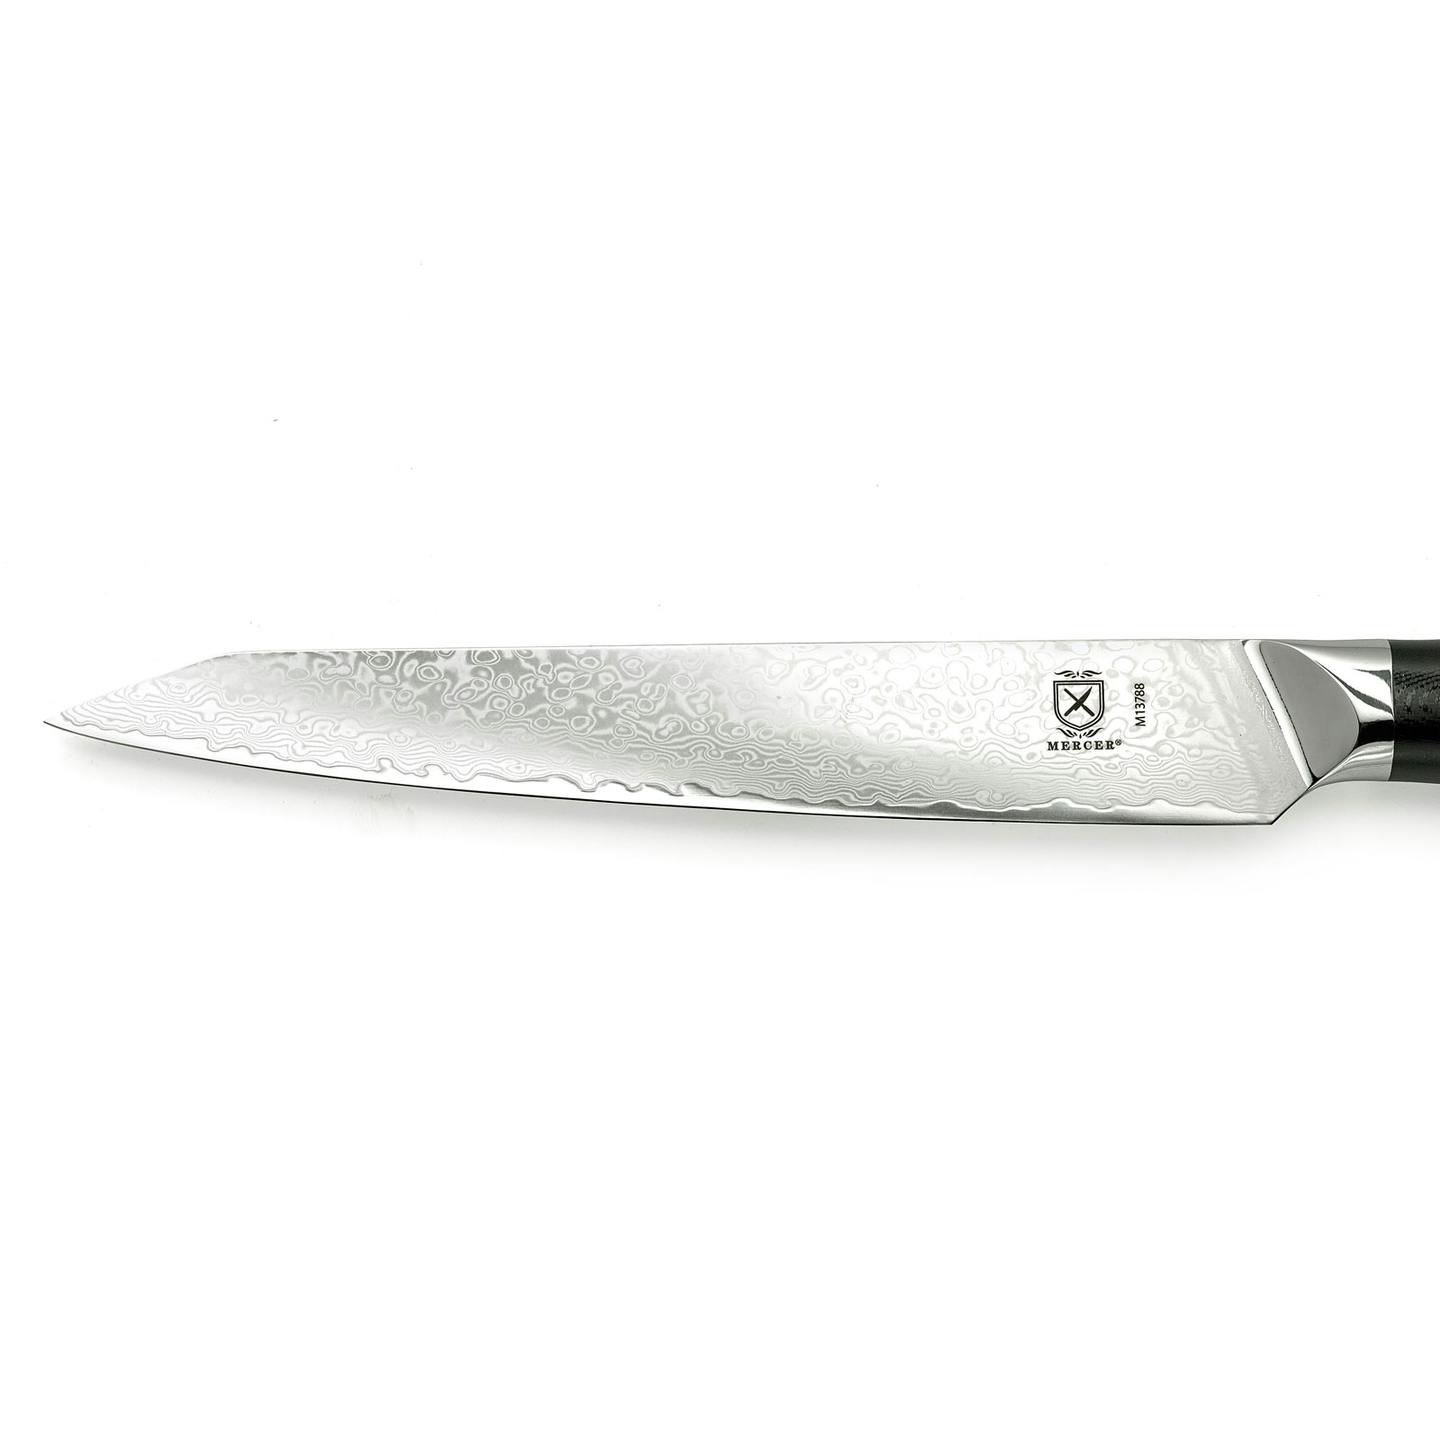 Mercer Culinary M13788 8" Premium Grade Super Steel Slicer